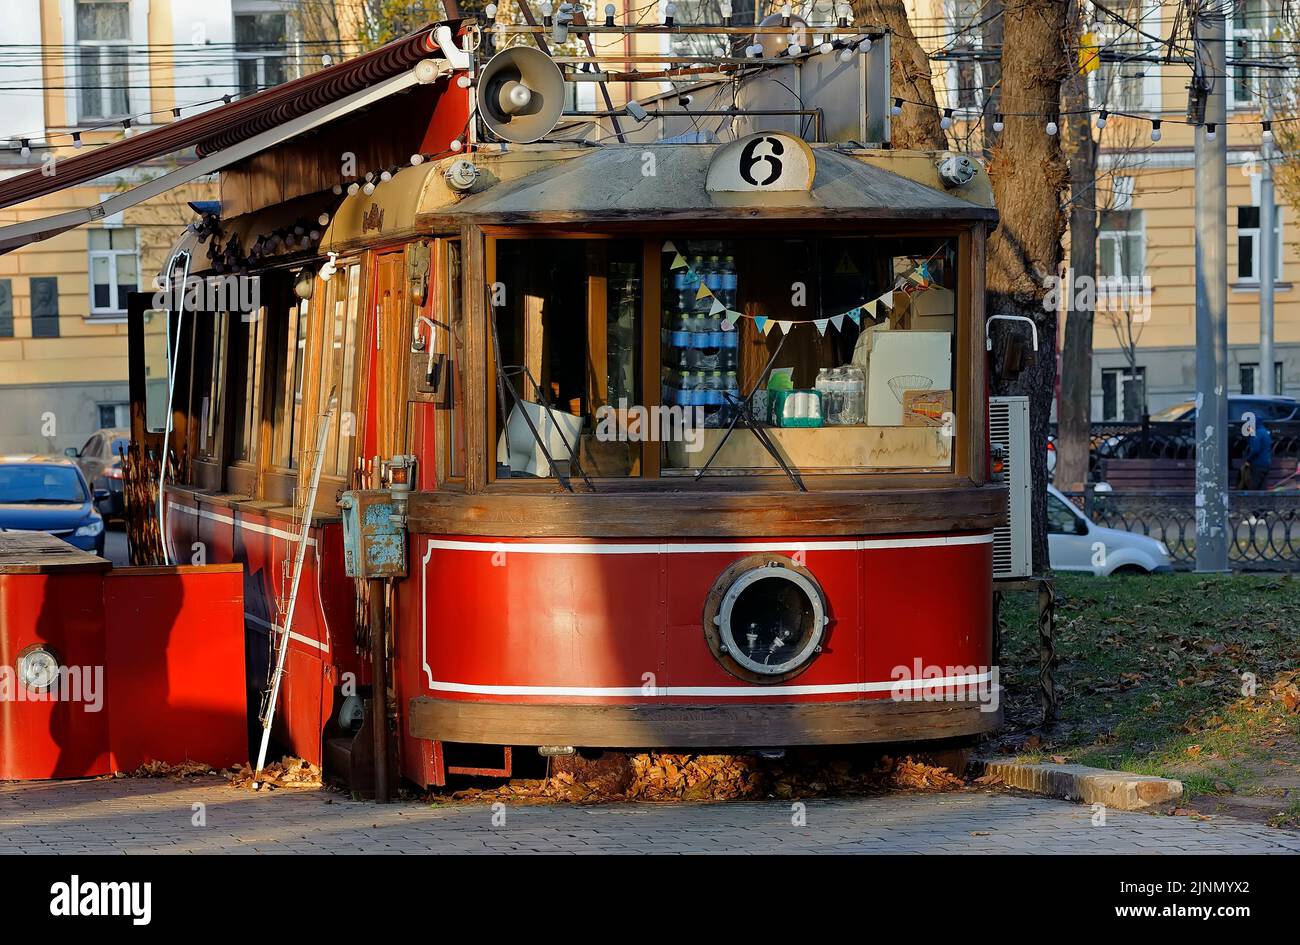 Cafe of vintage tram in city park in Kyiv Ukraine Stock Photo